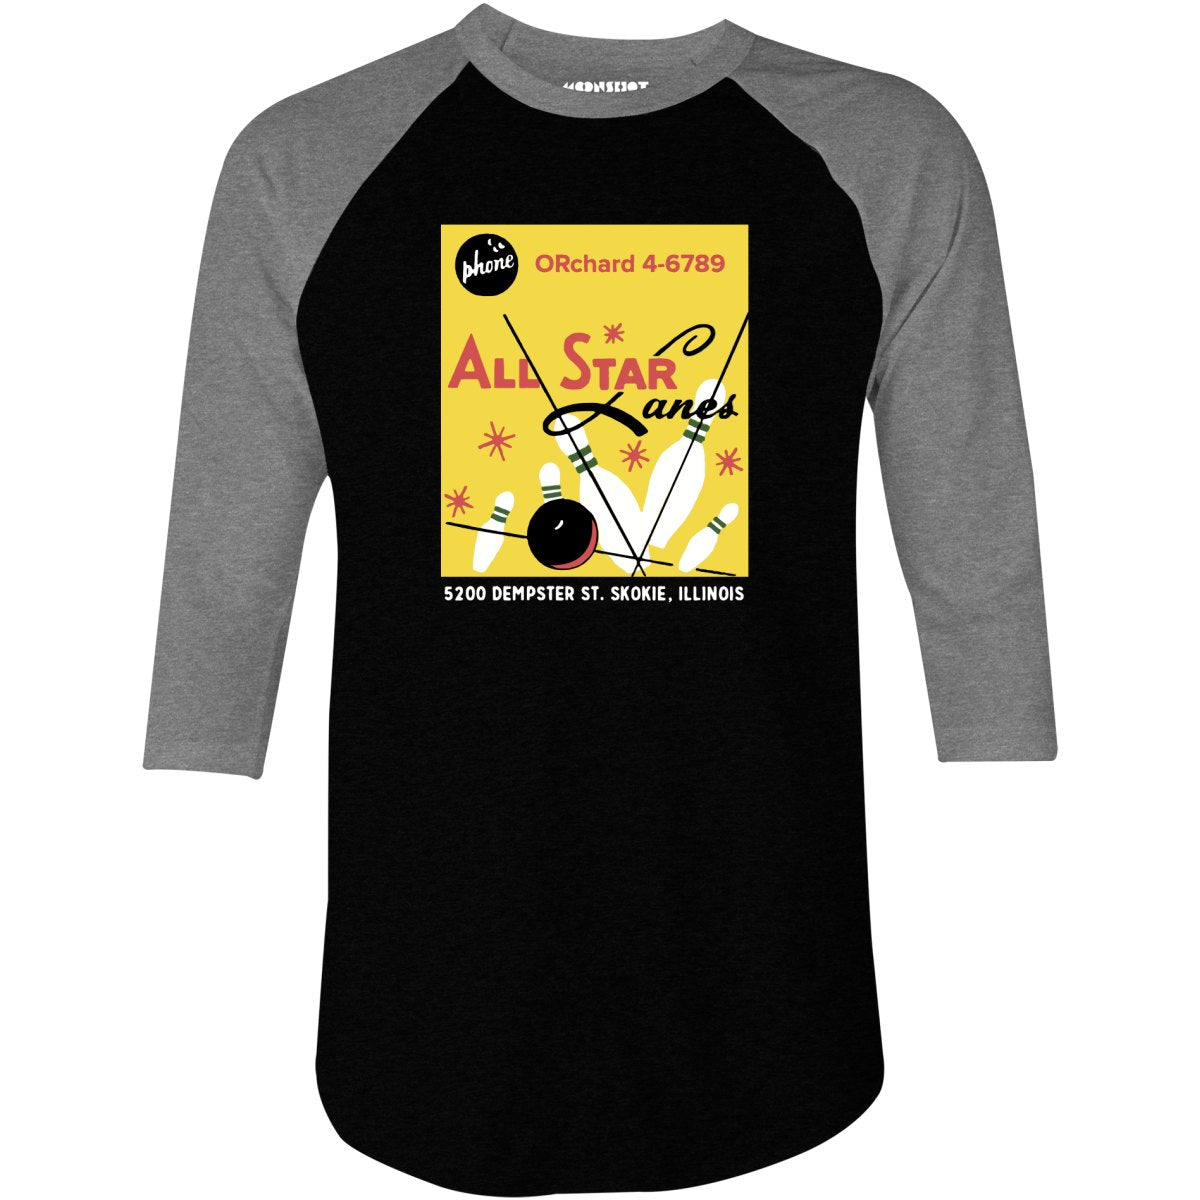 All Star Lanes v2 - St. Skokie, IL - Vintage Bowling Alley - 3/4 Sleeve Raglan T-Shirt